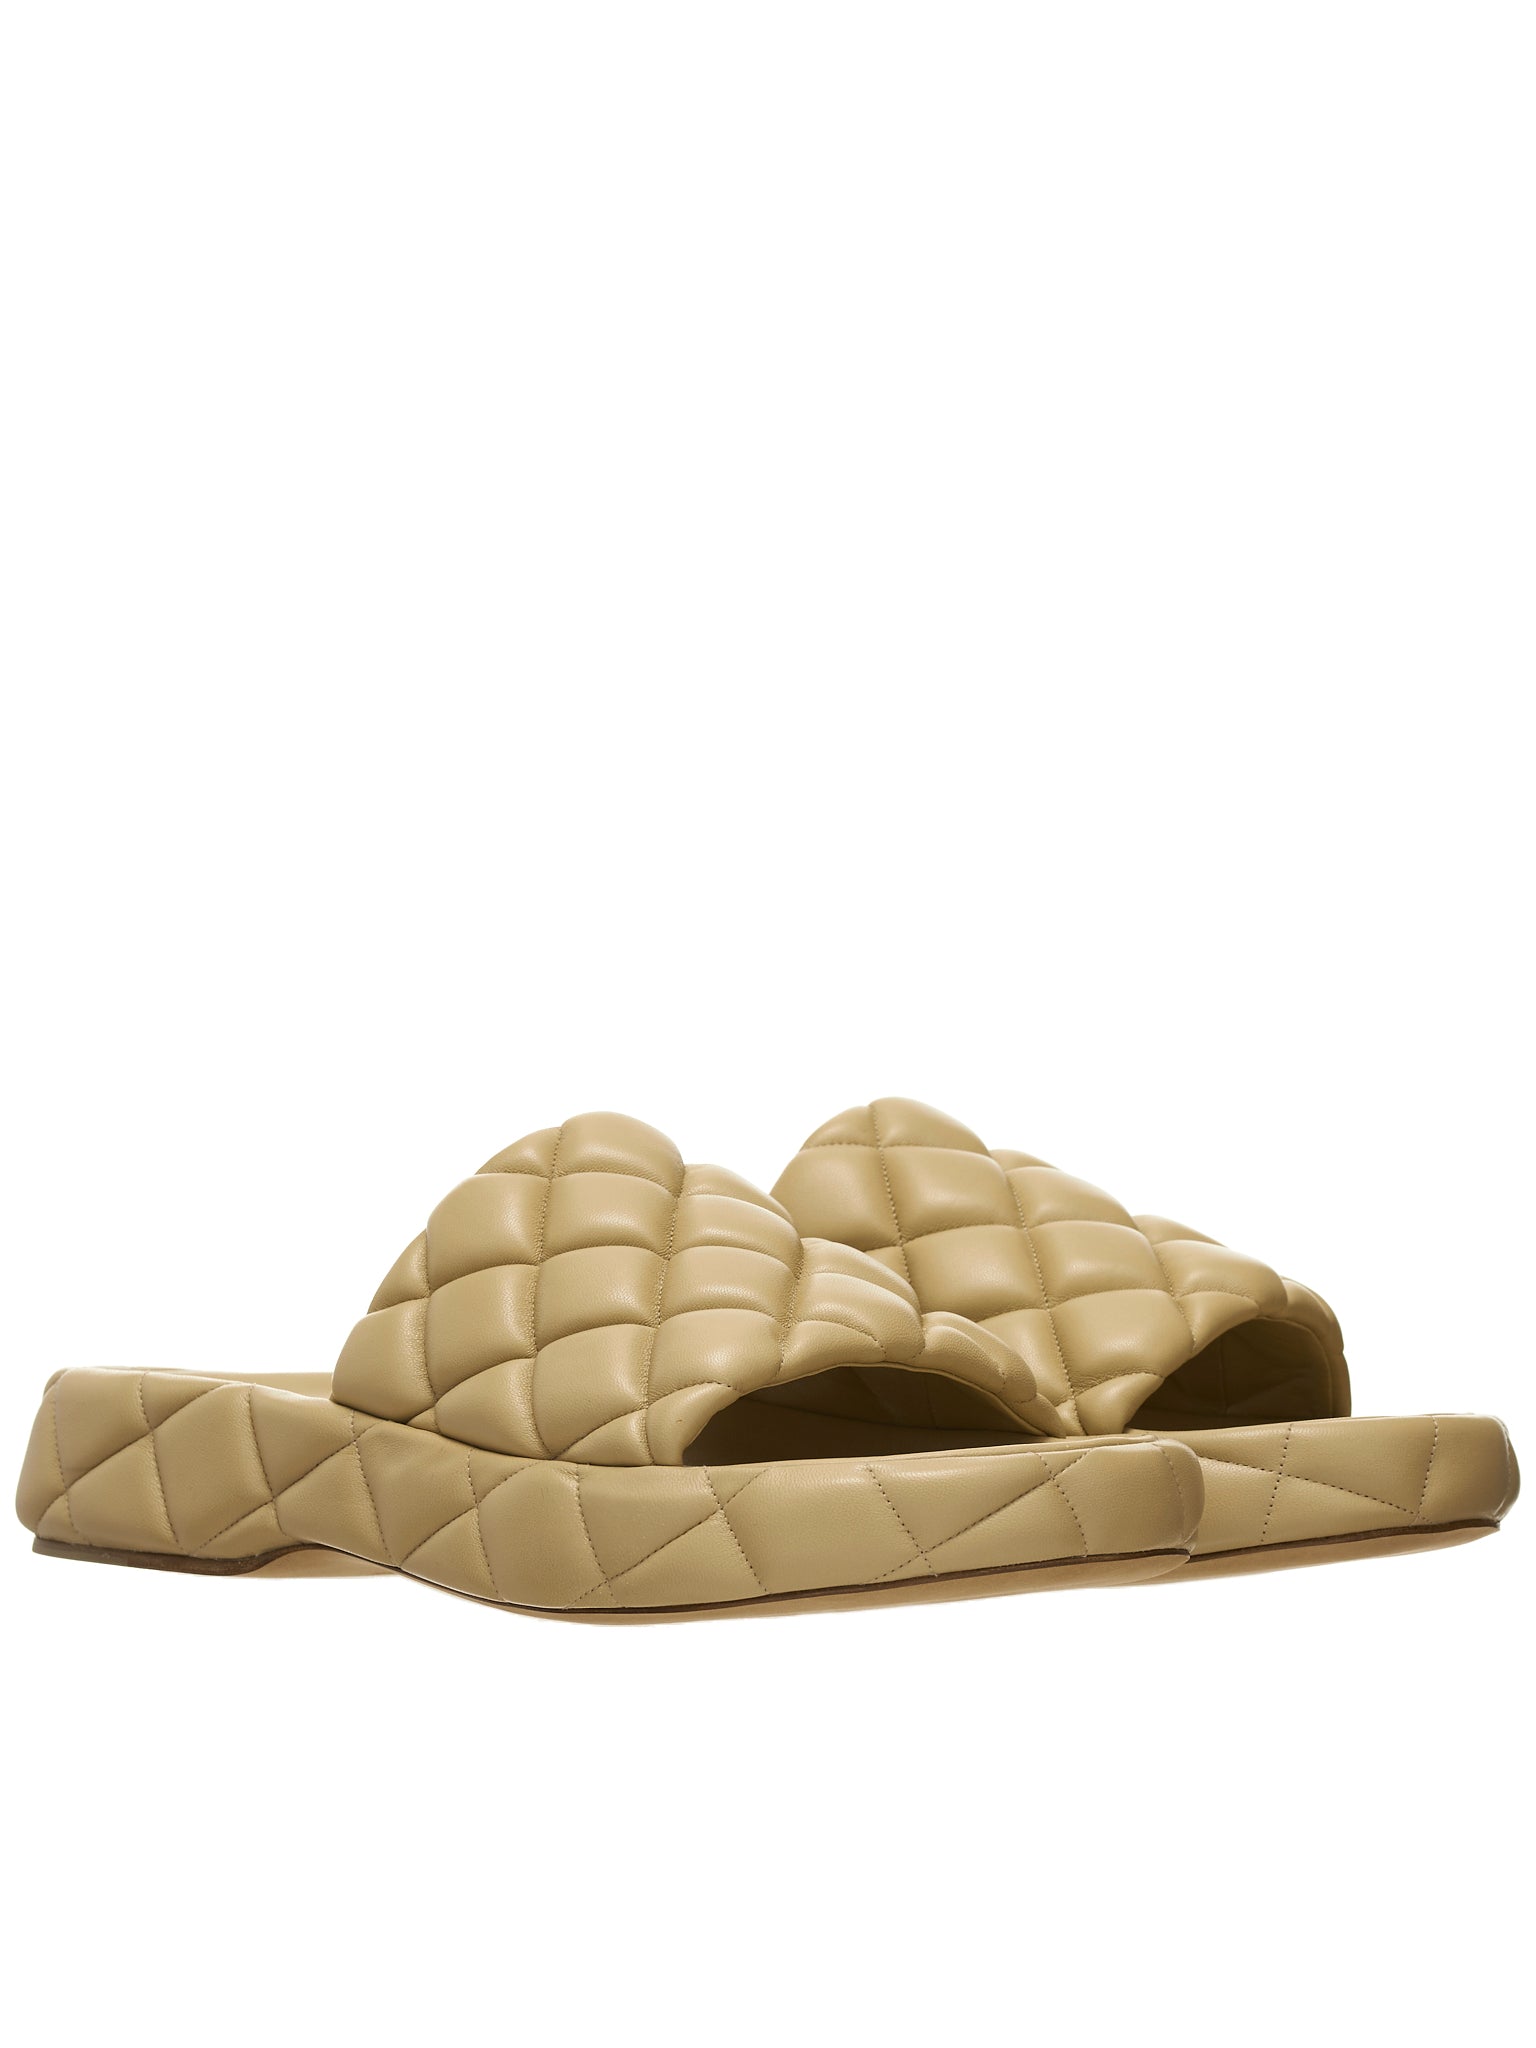 Bottega Veneta Padded Sandals | H. Lorenzo - detail 1